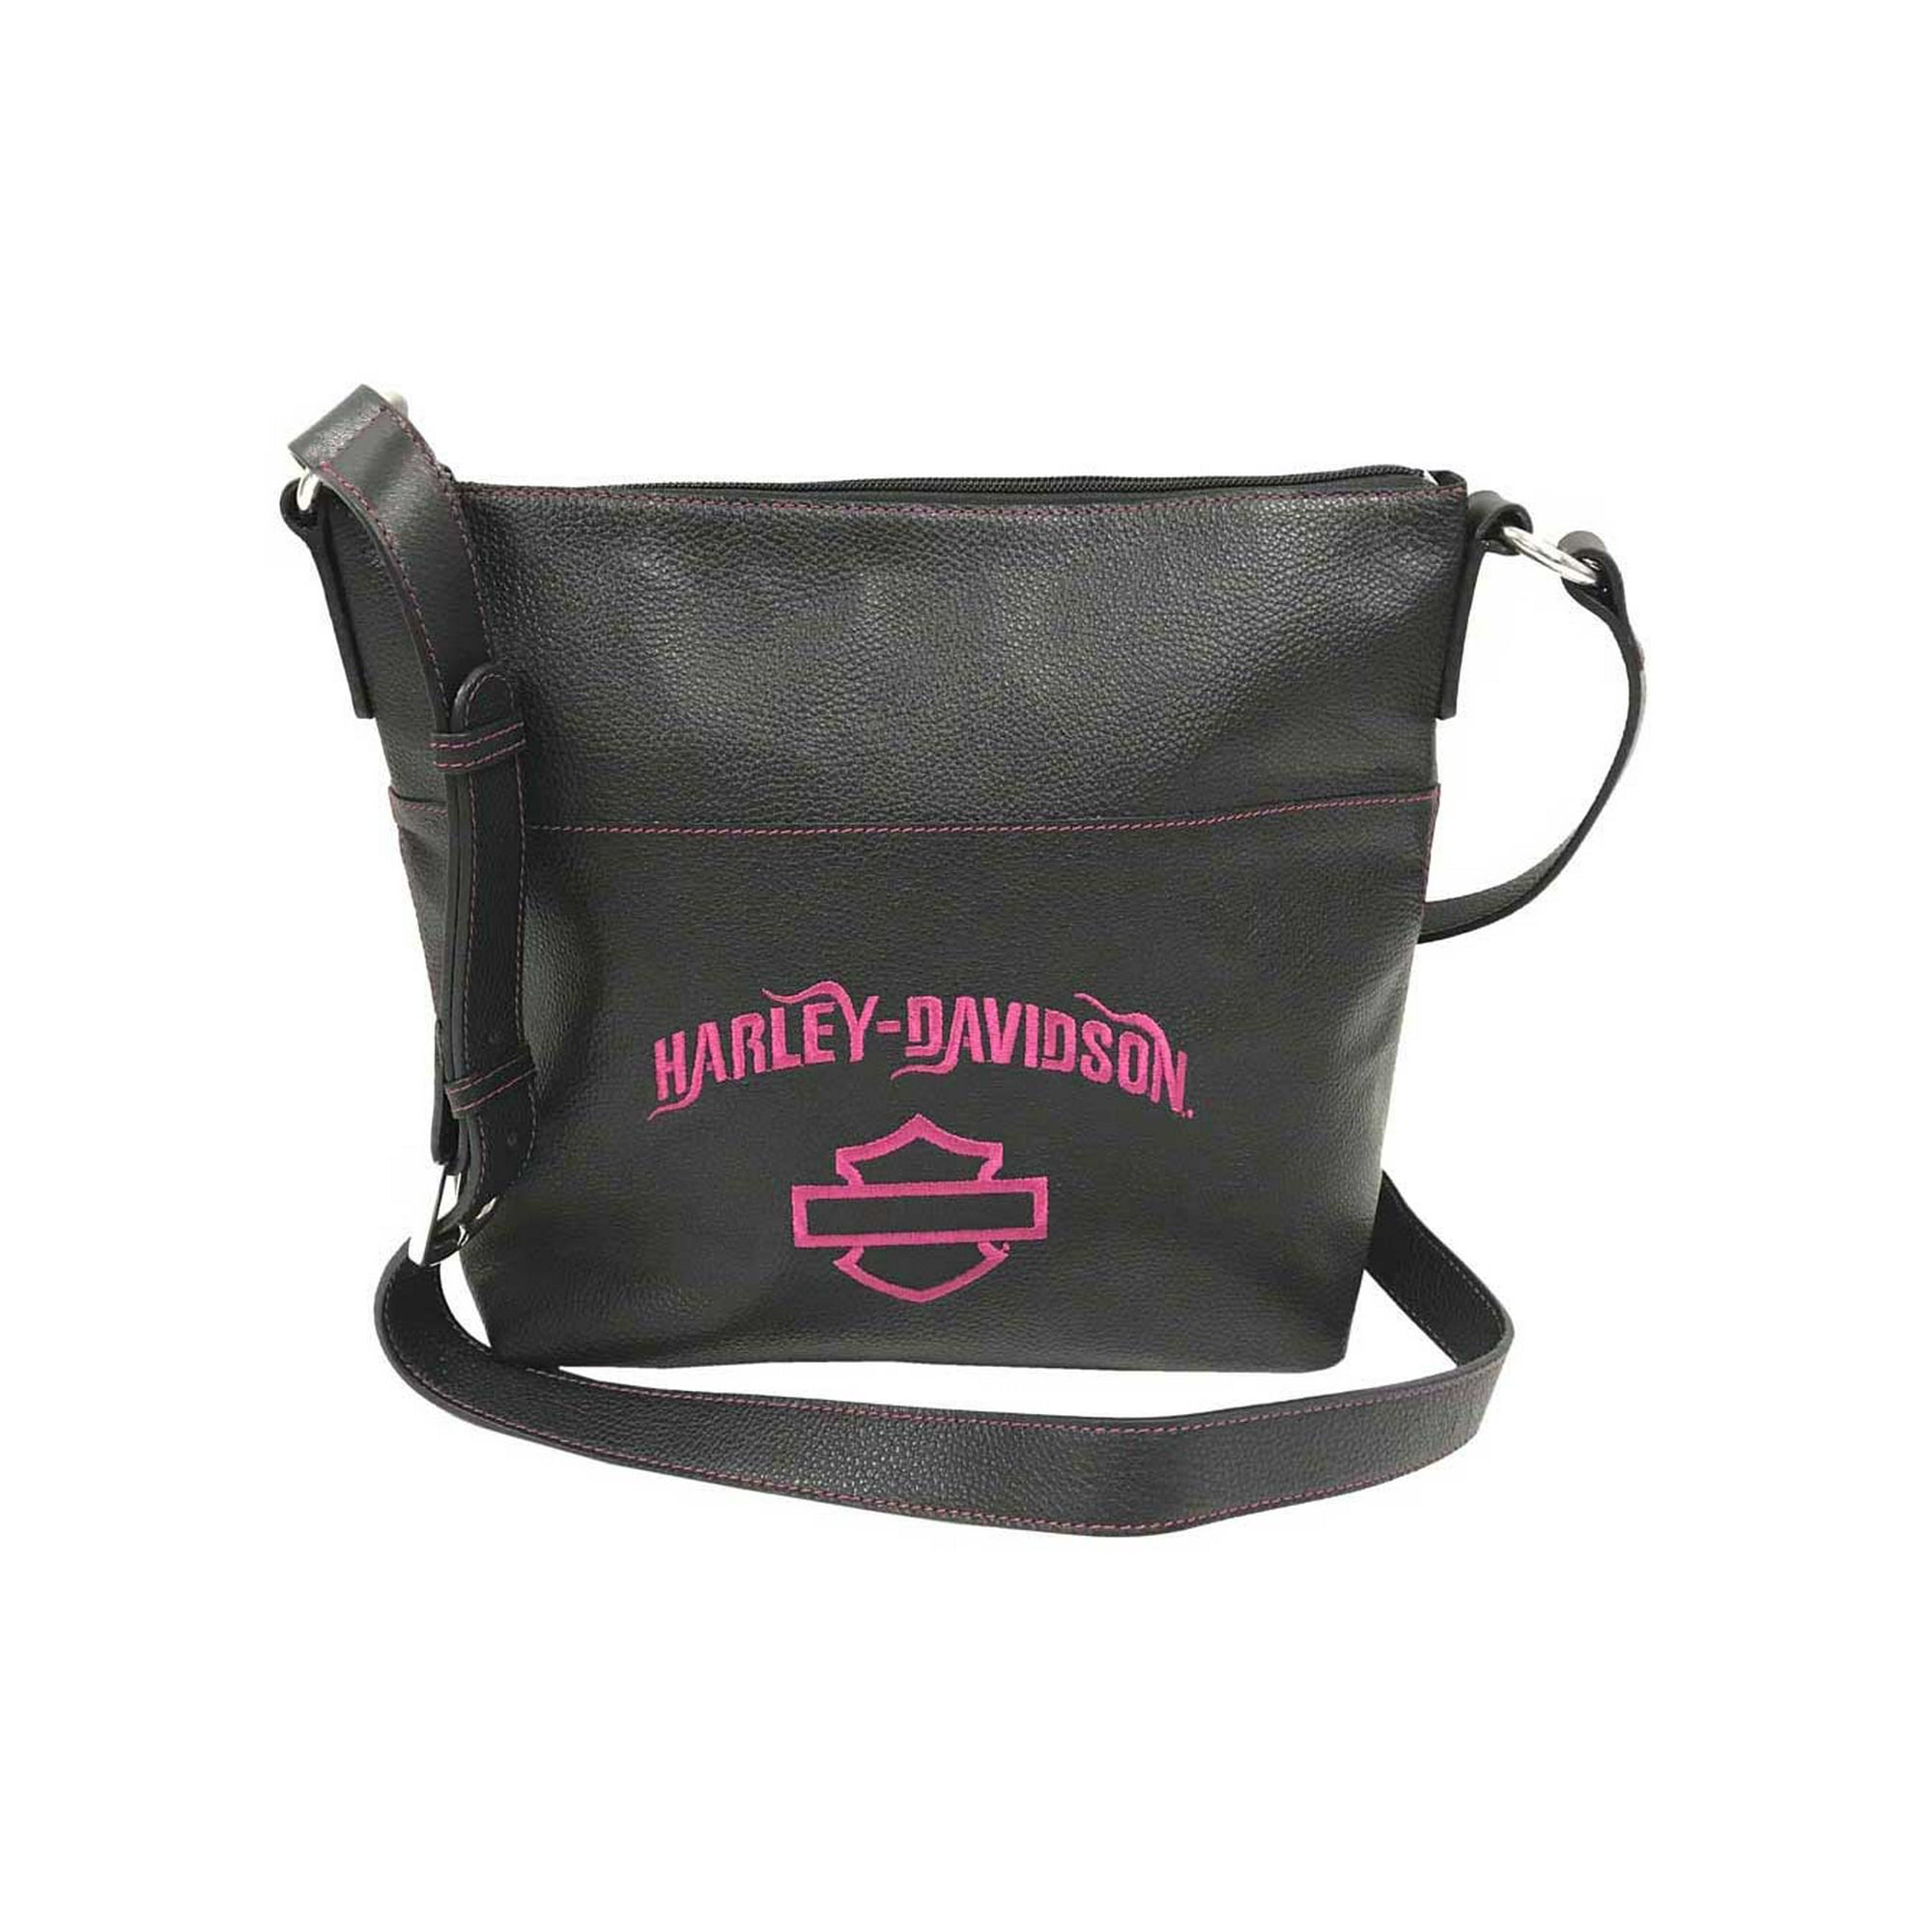 Harley-Davidson Women's Fuchsia Embroidery Bucket Purse, Black  FEE2514-FUHBLK, Harley Davidson 